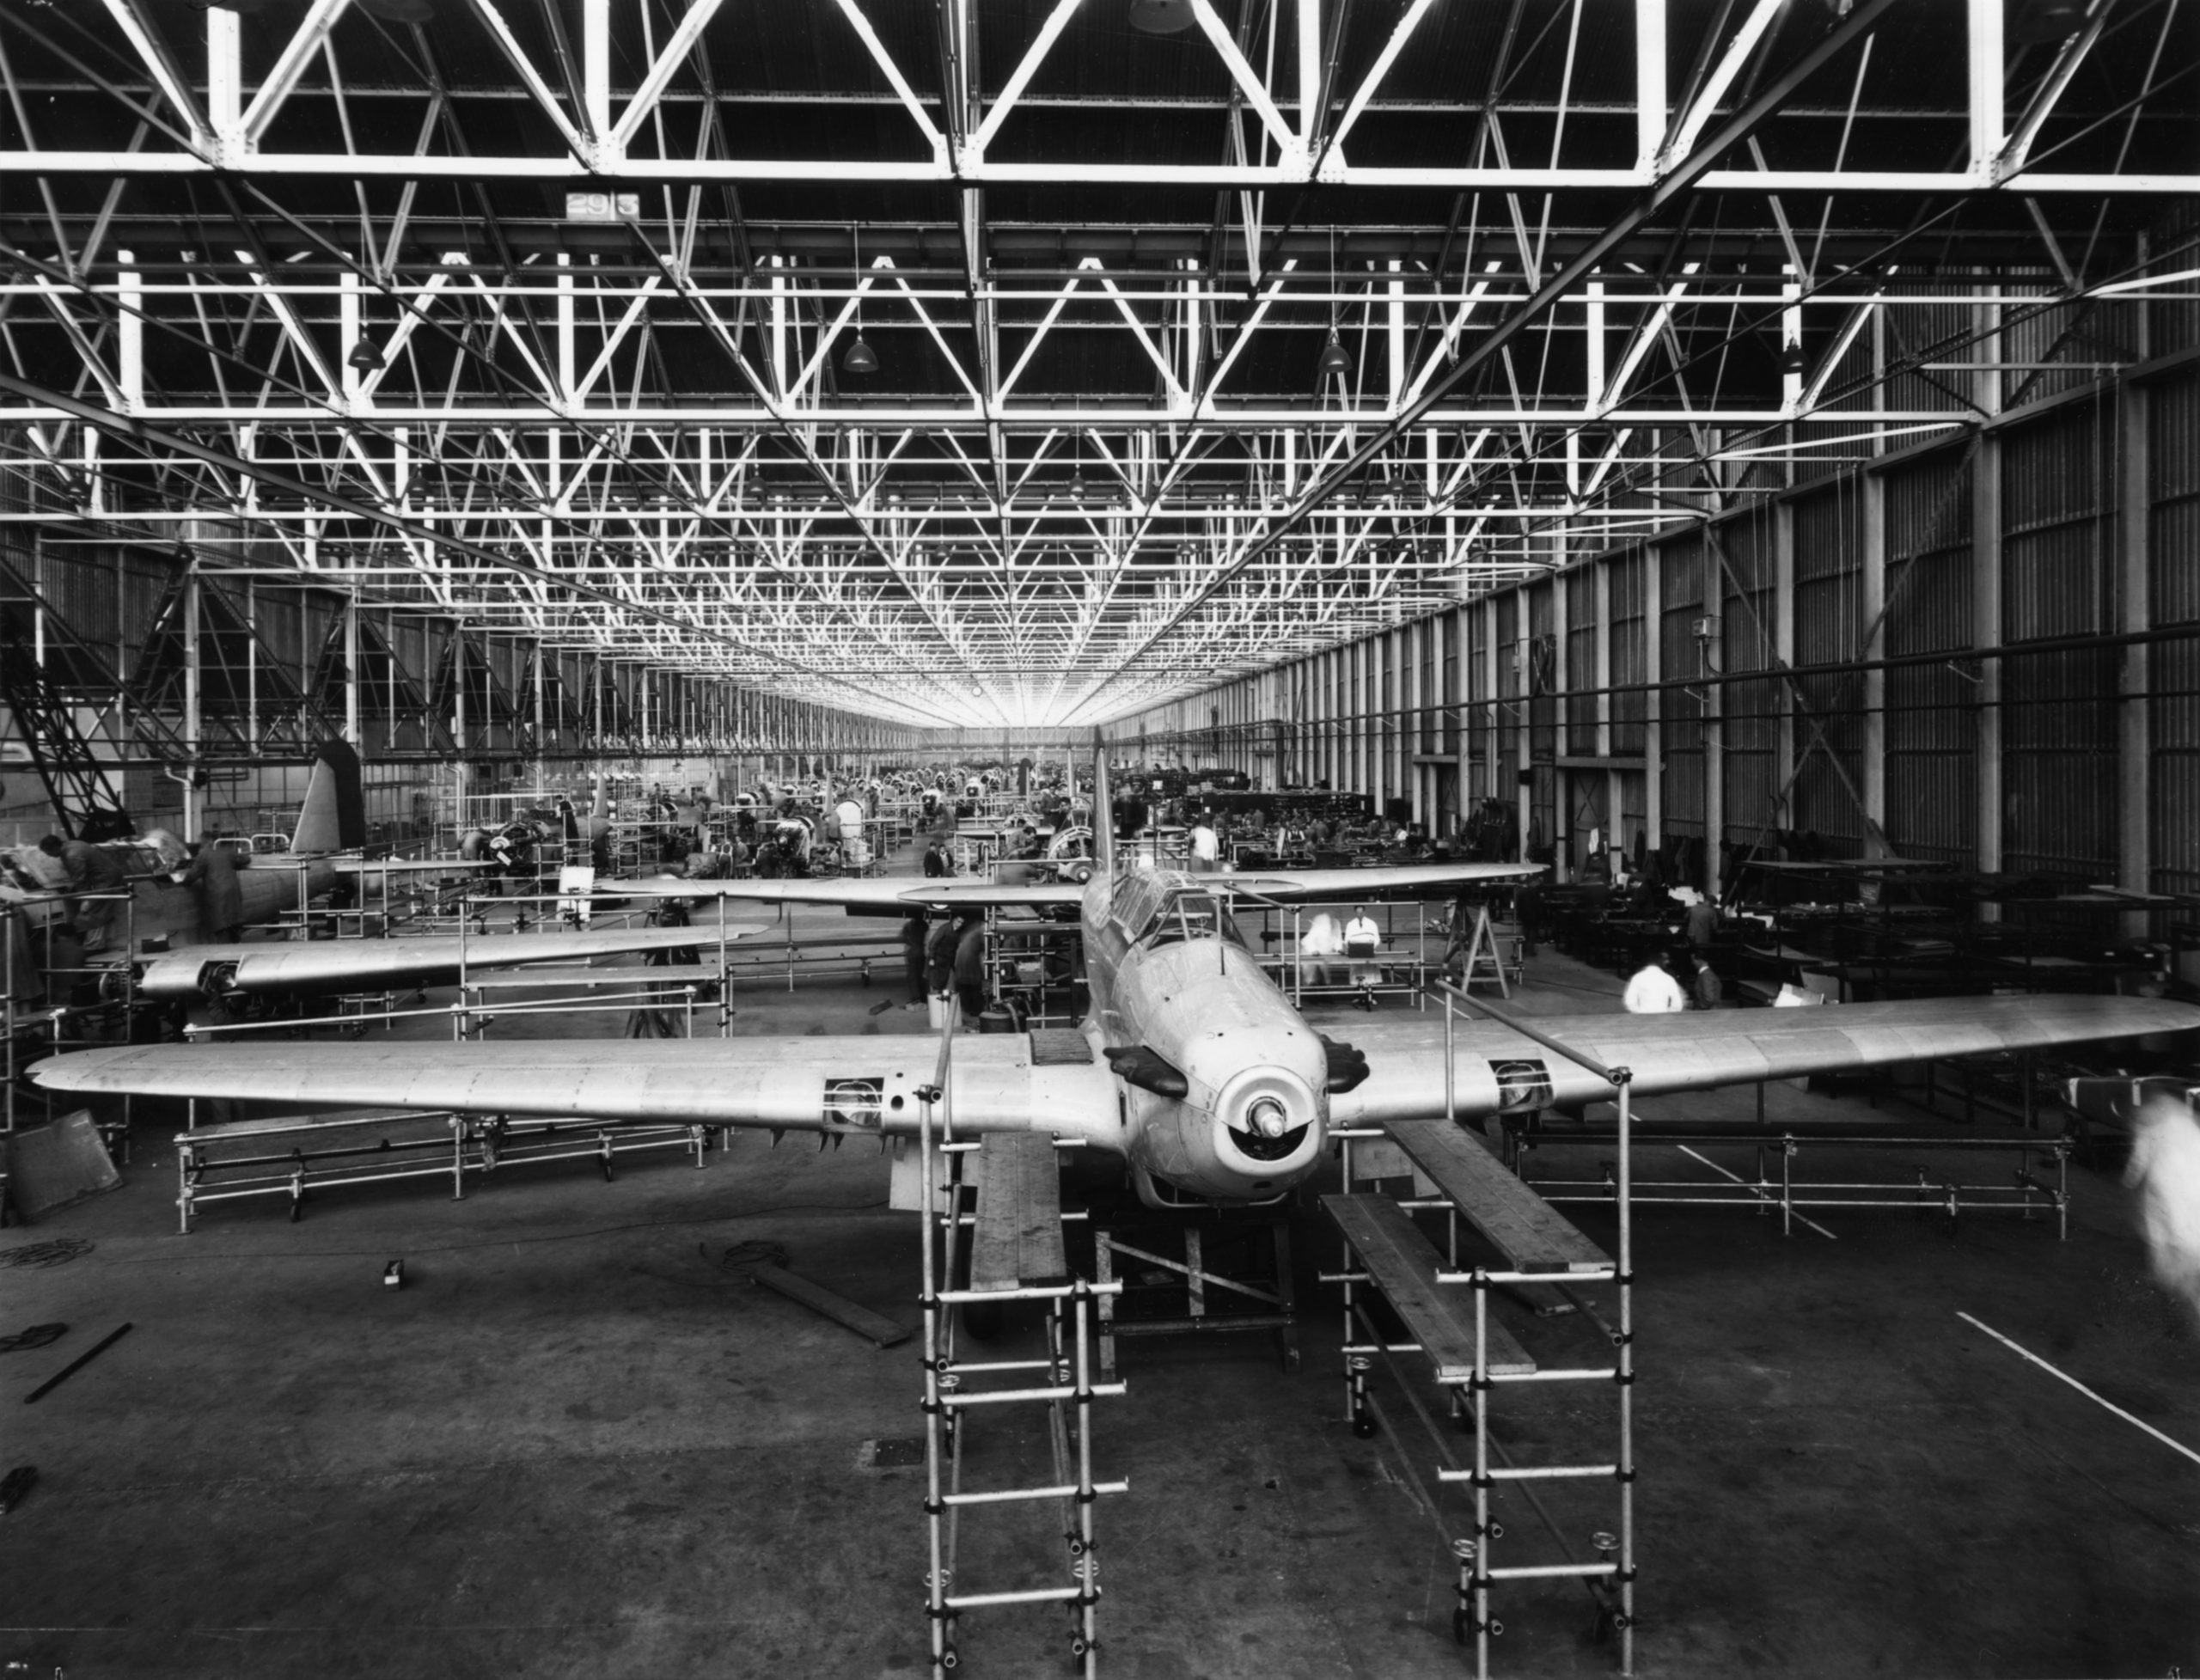 Longbridge factory Austin 1940s. World War Two aero production in East Works.